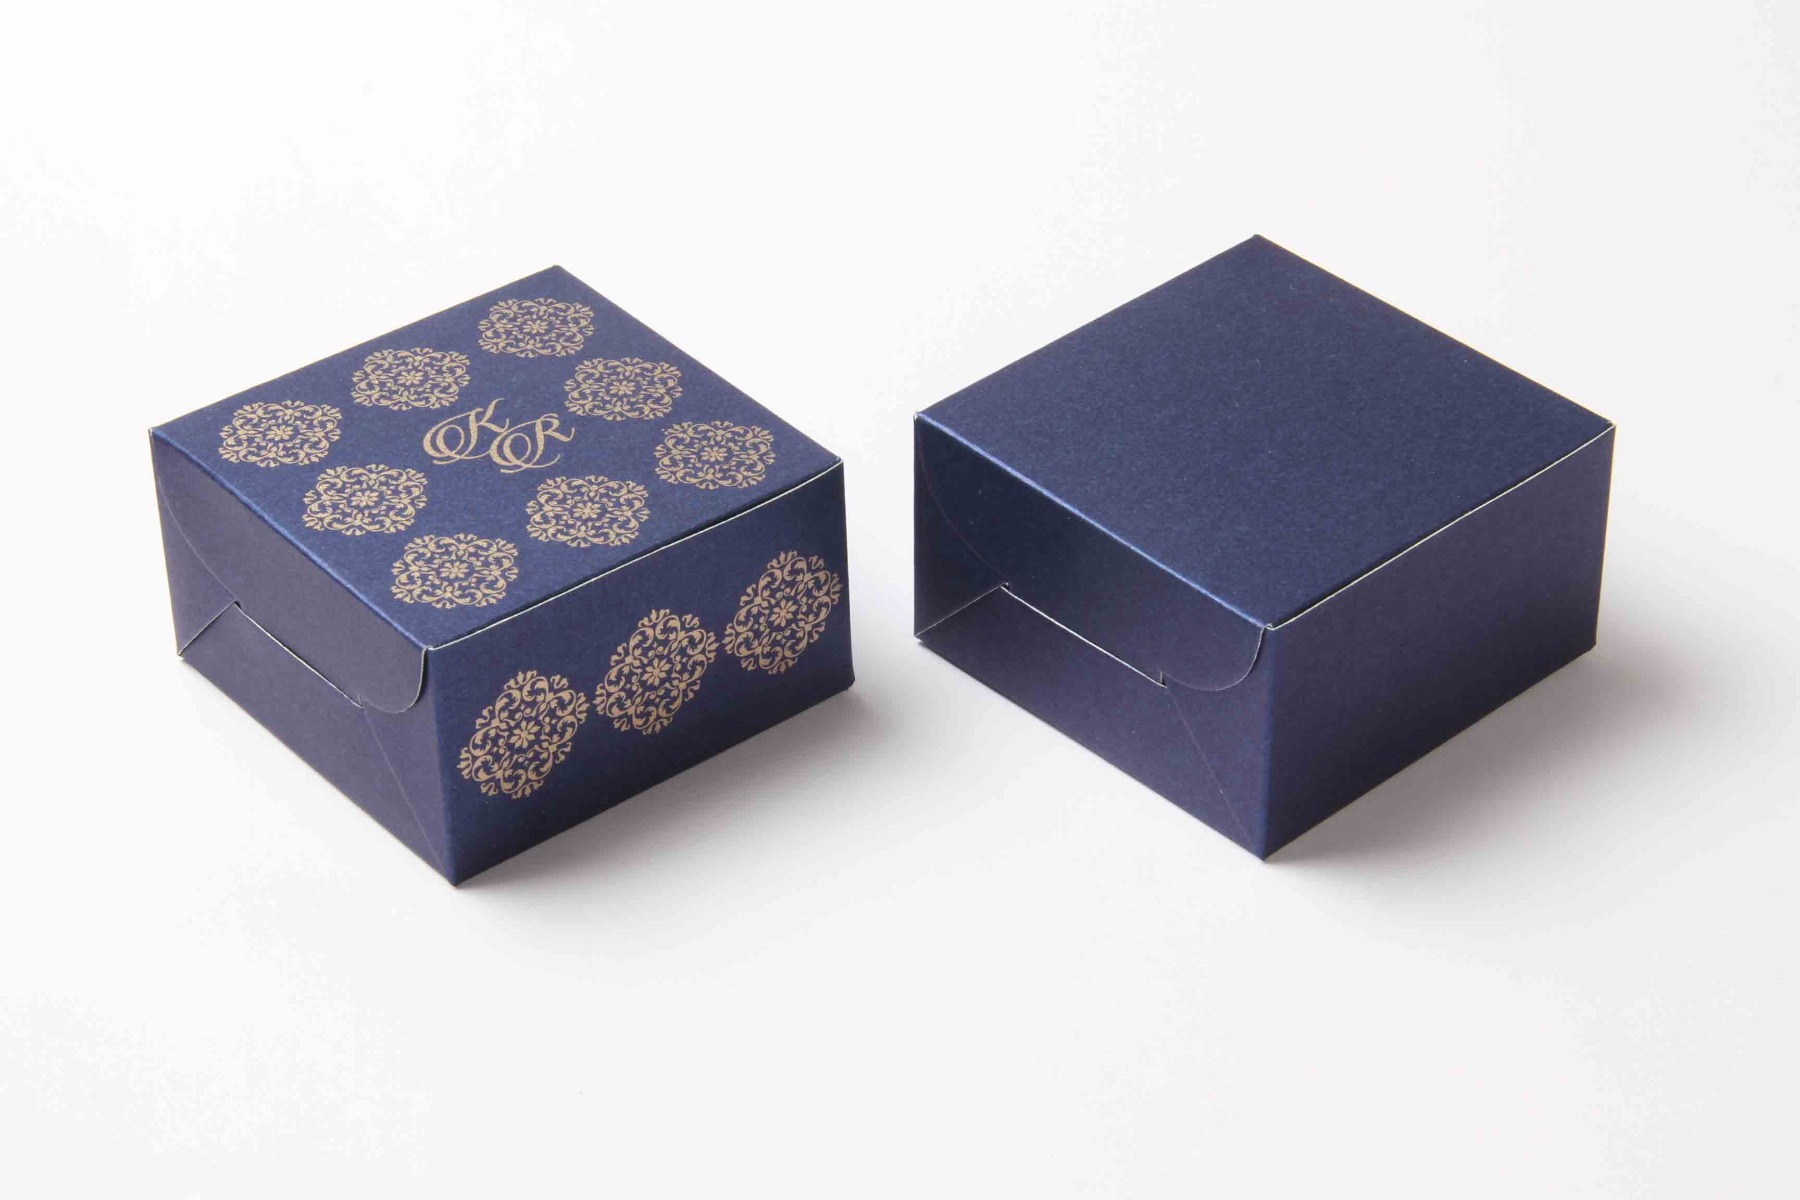 Small Size Cube Box No 6 - Royal Blue-0